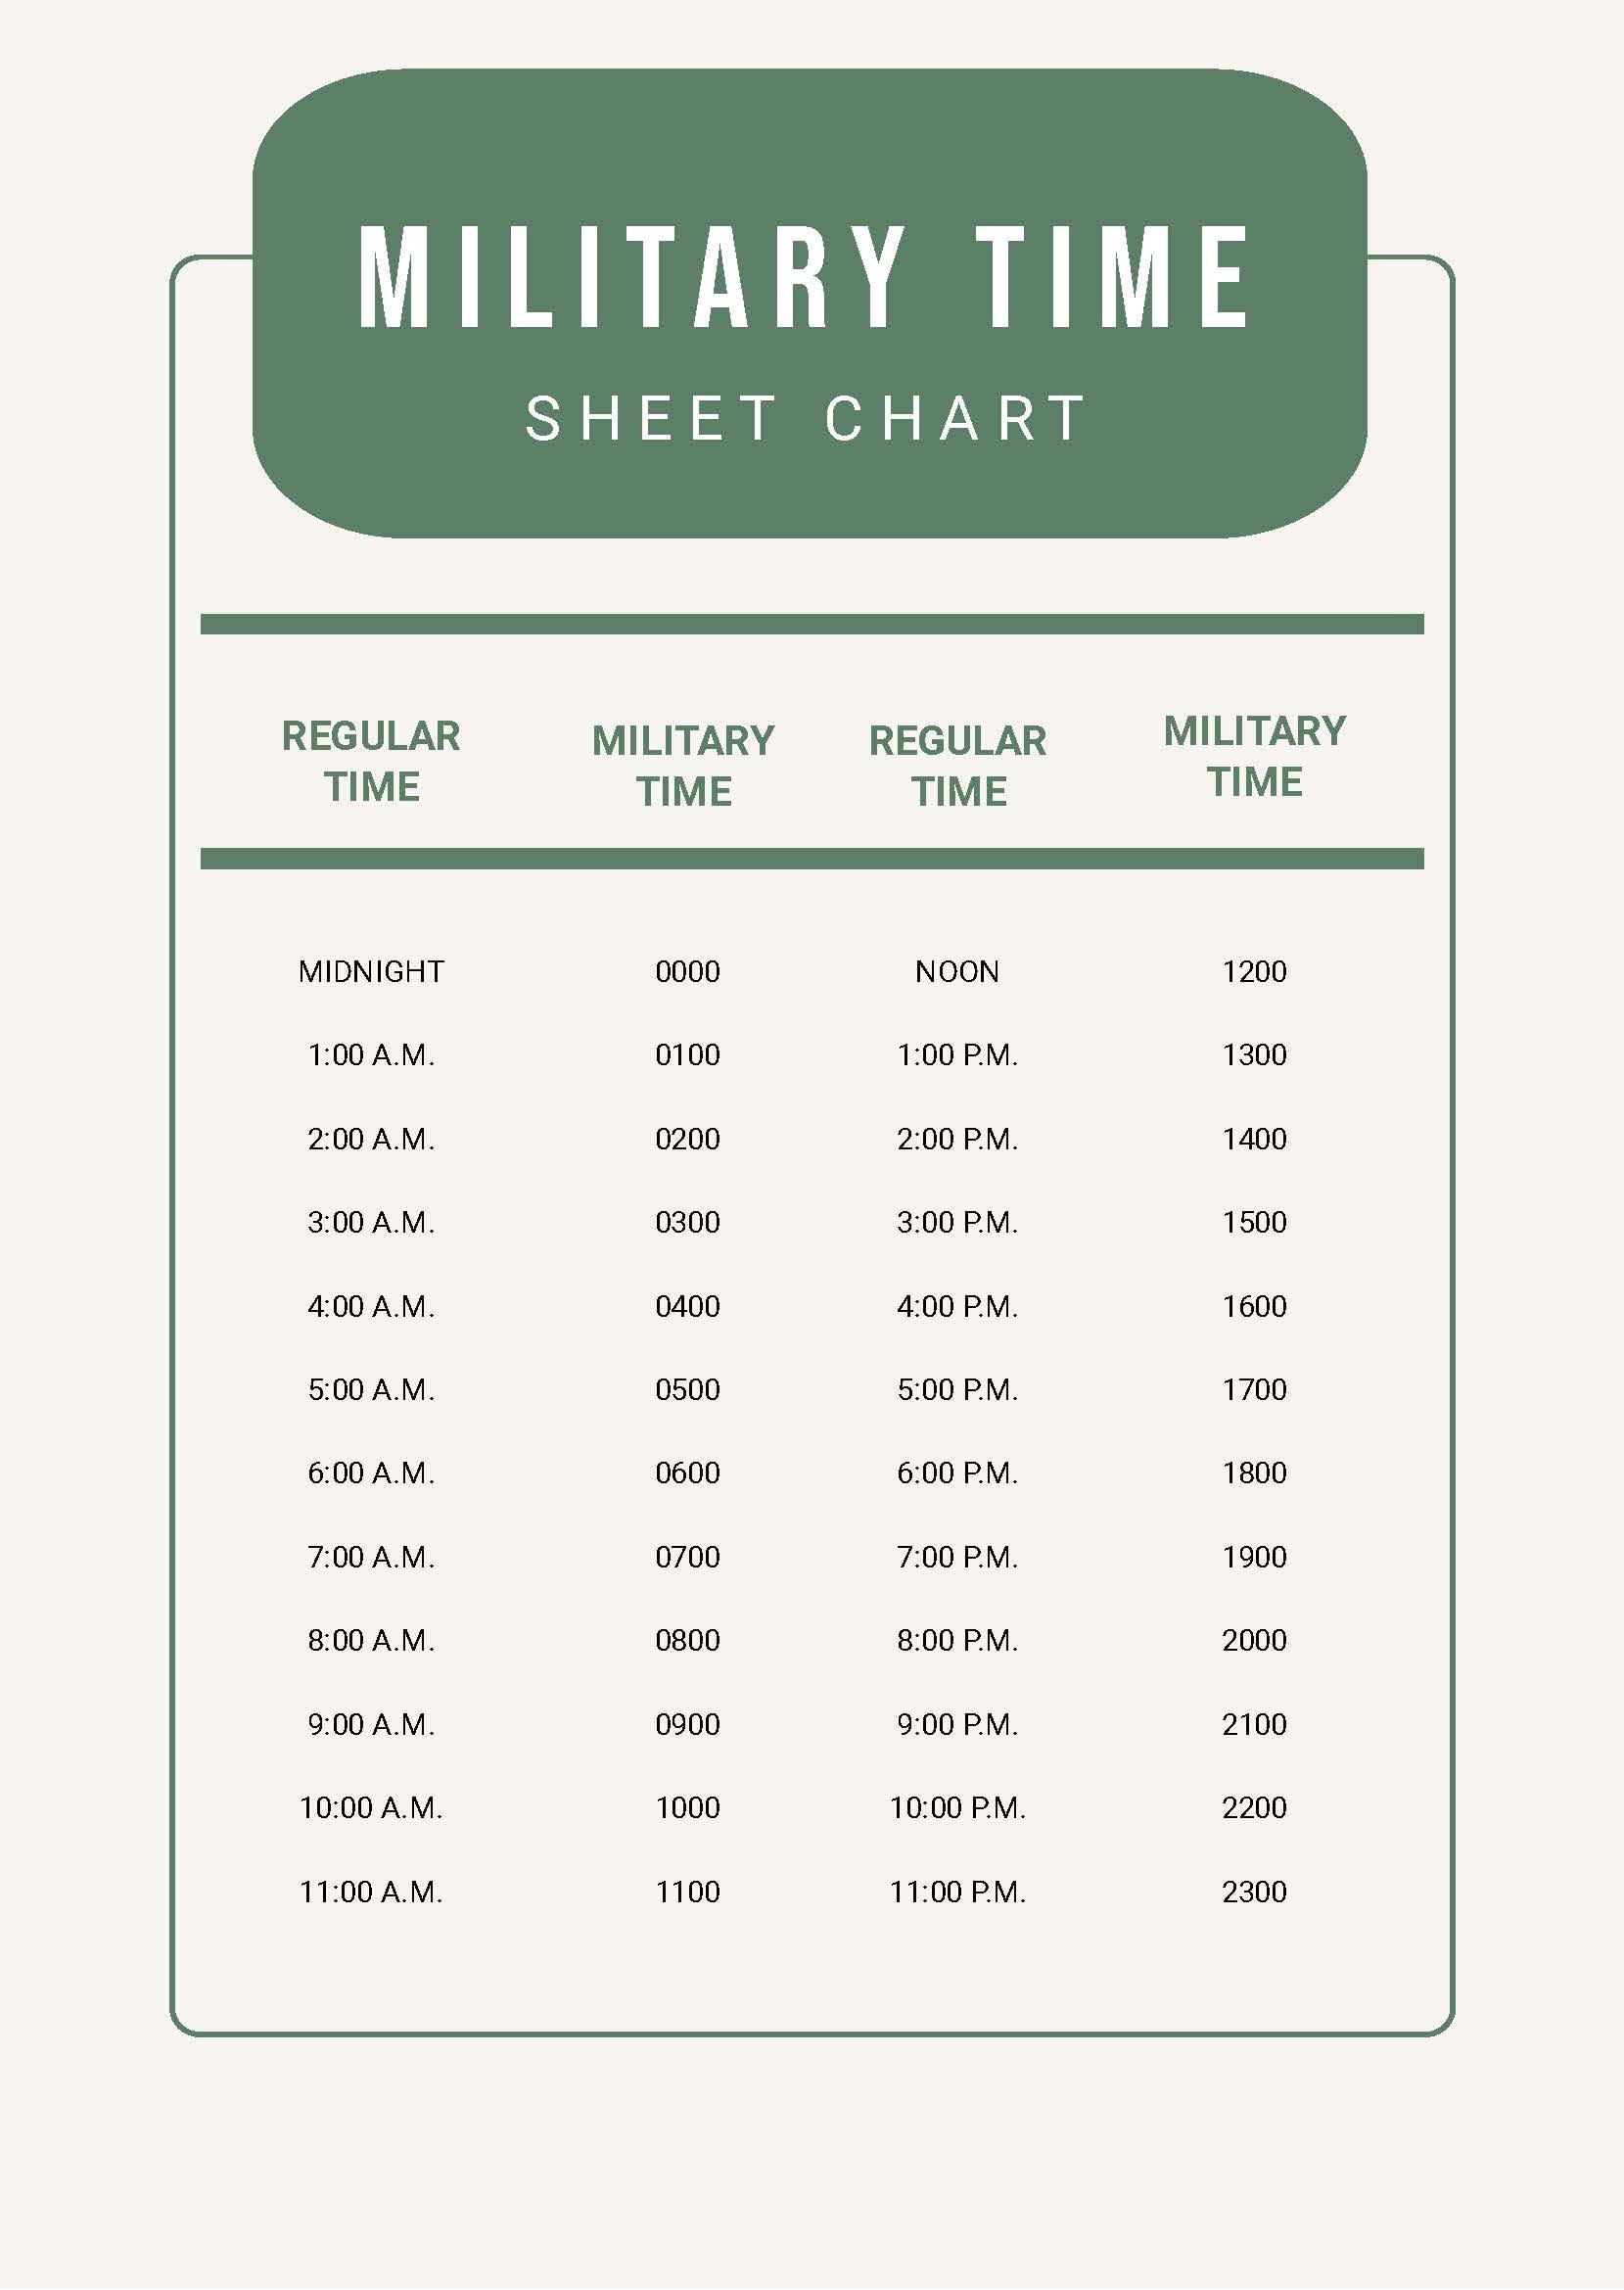 Military Time Sheet Chart